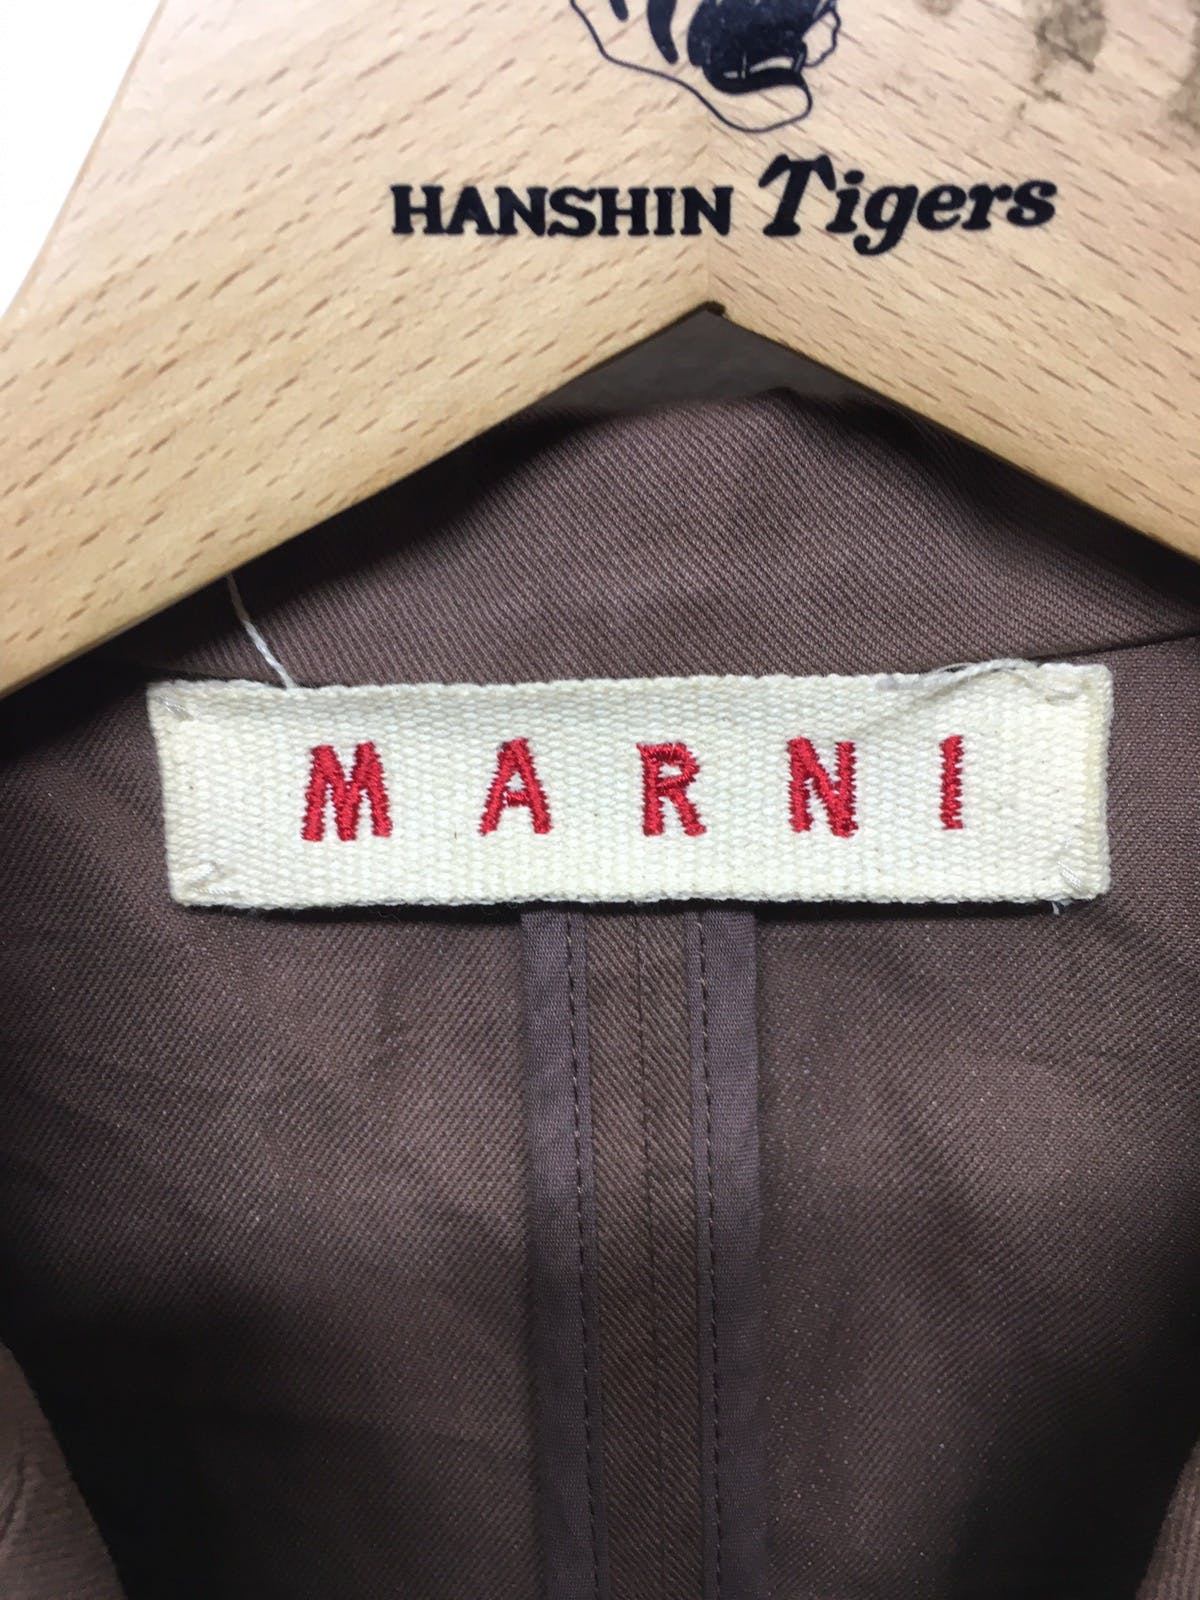 Marni light jacket/coat